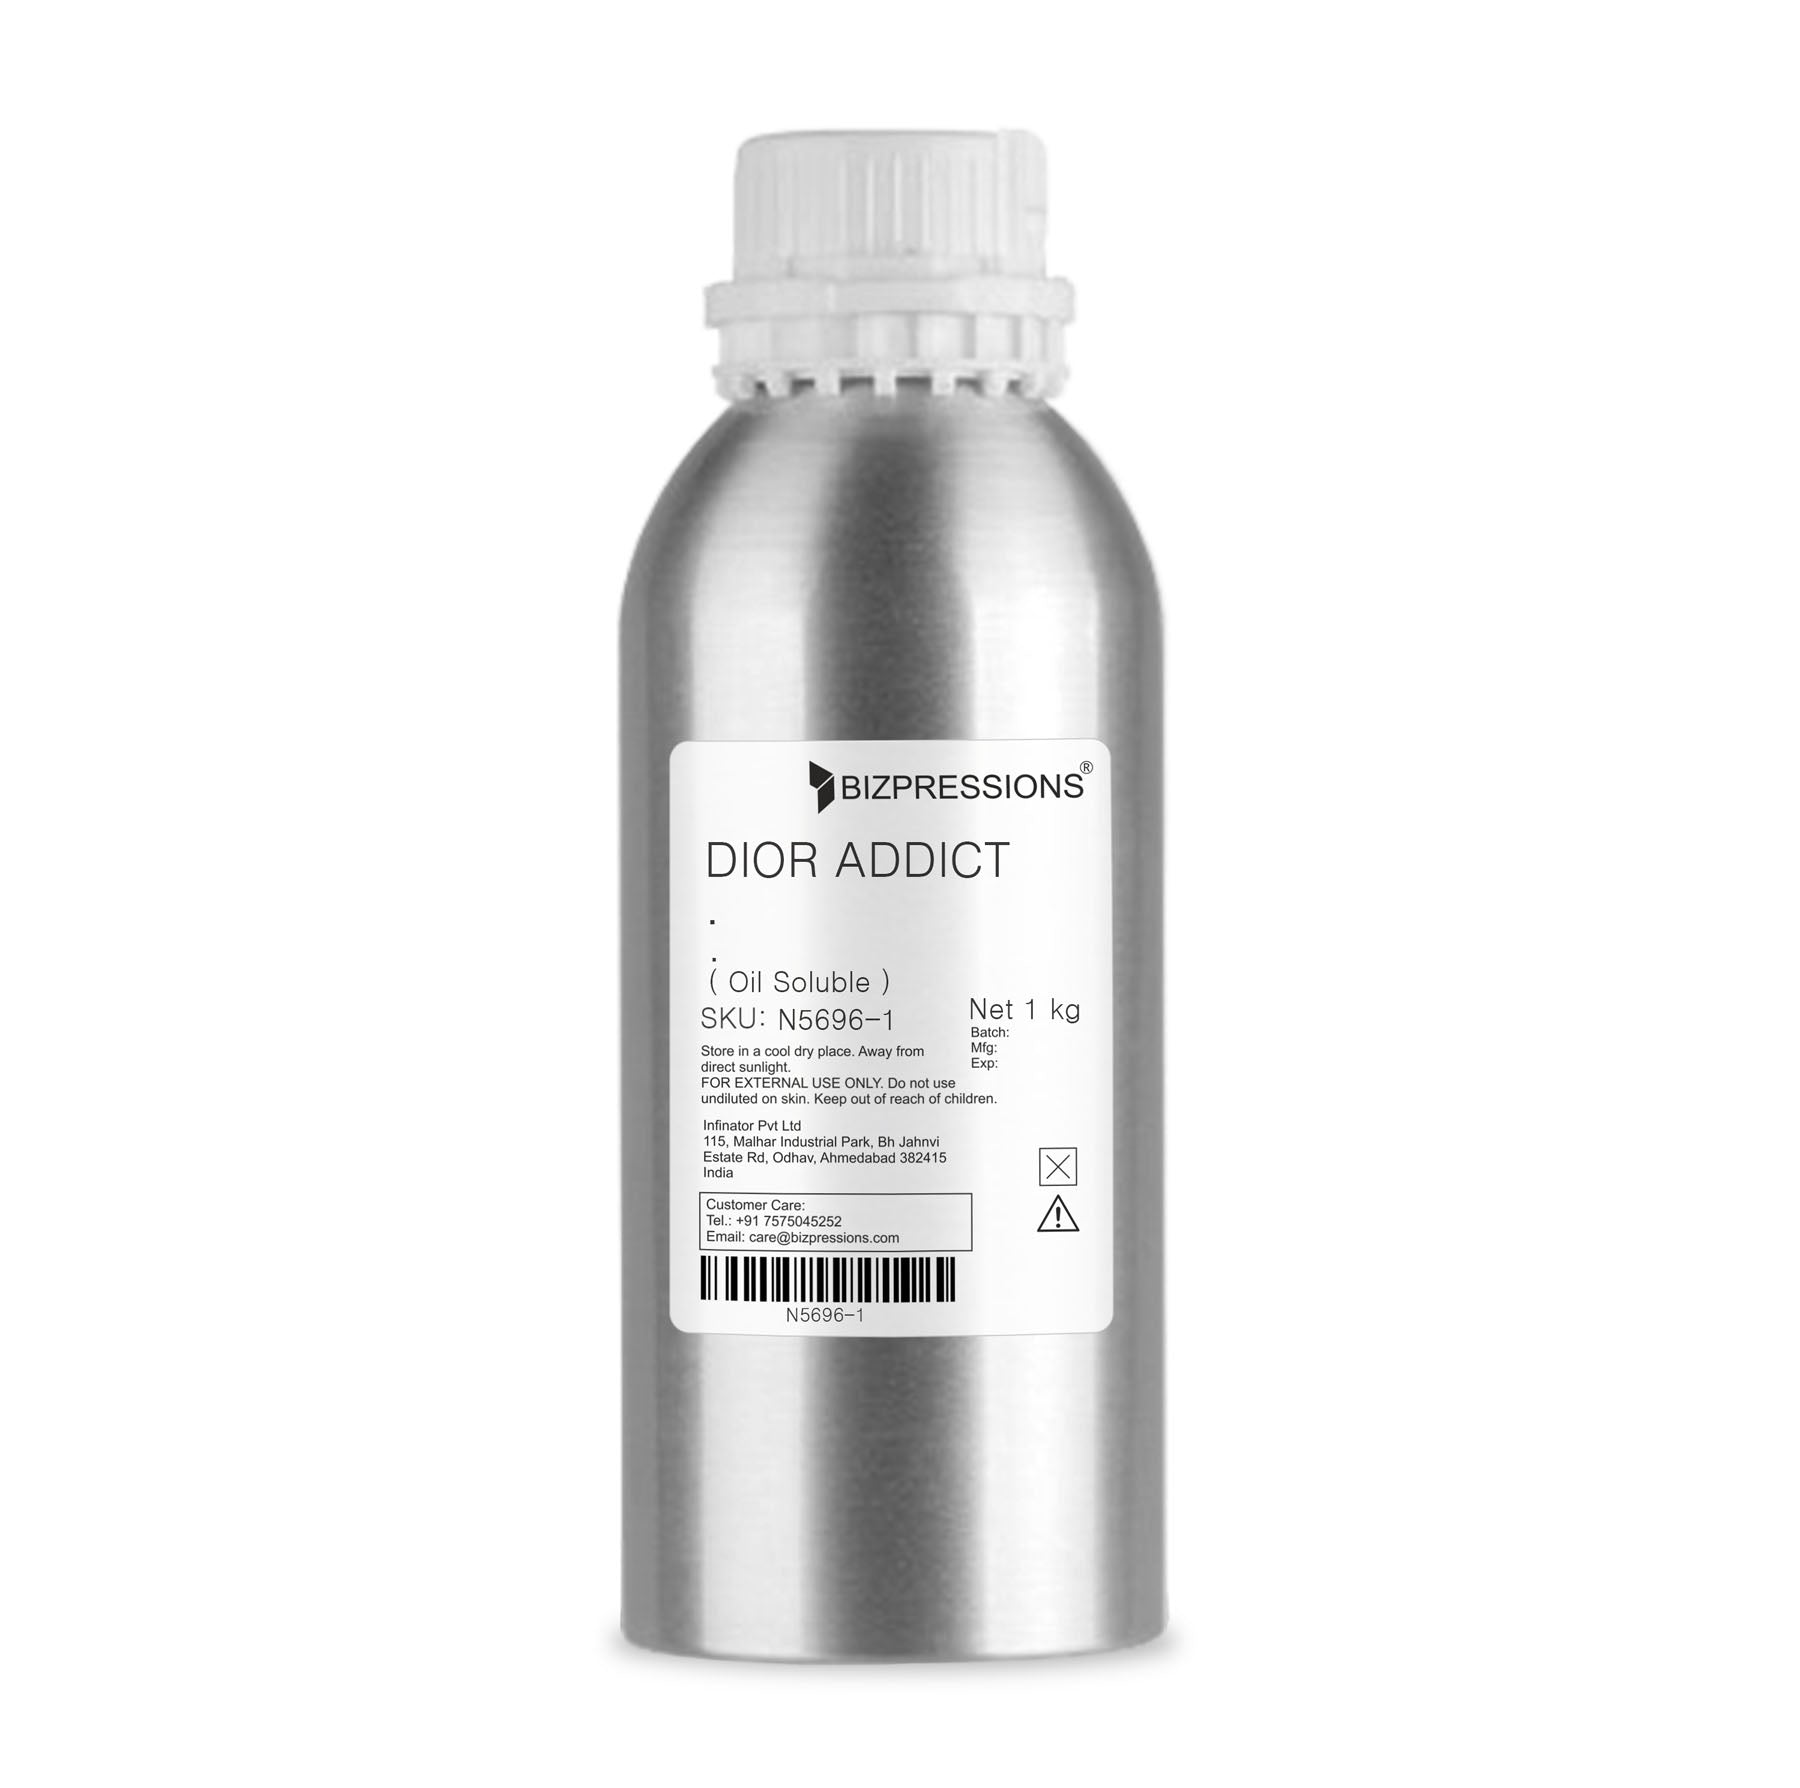 DIOR ADDICT - Fragrance ( Oil Soluble ) - 1 kg